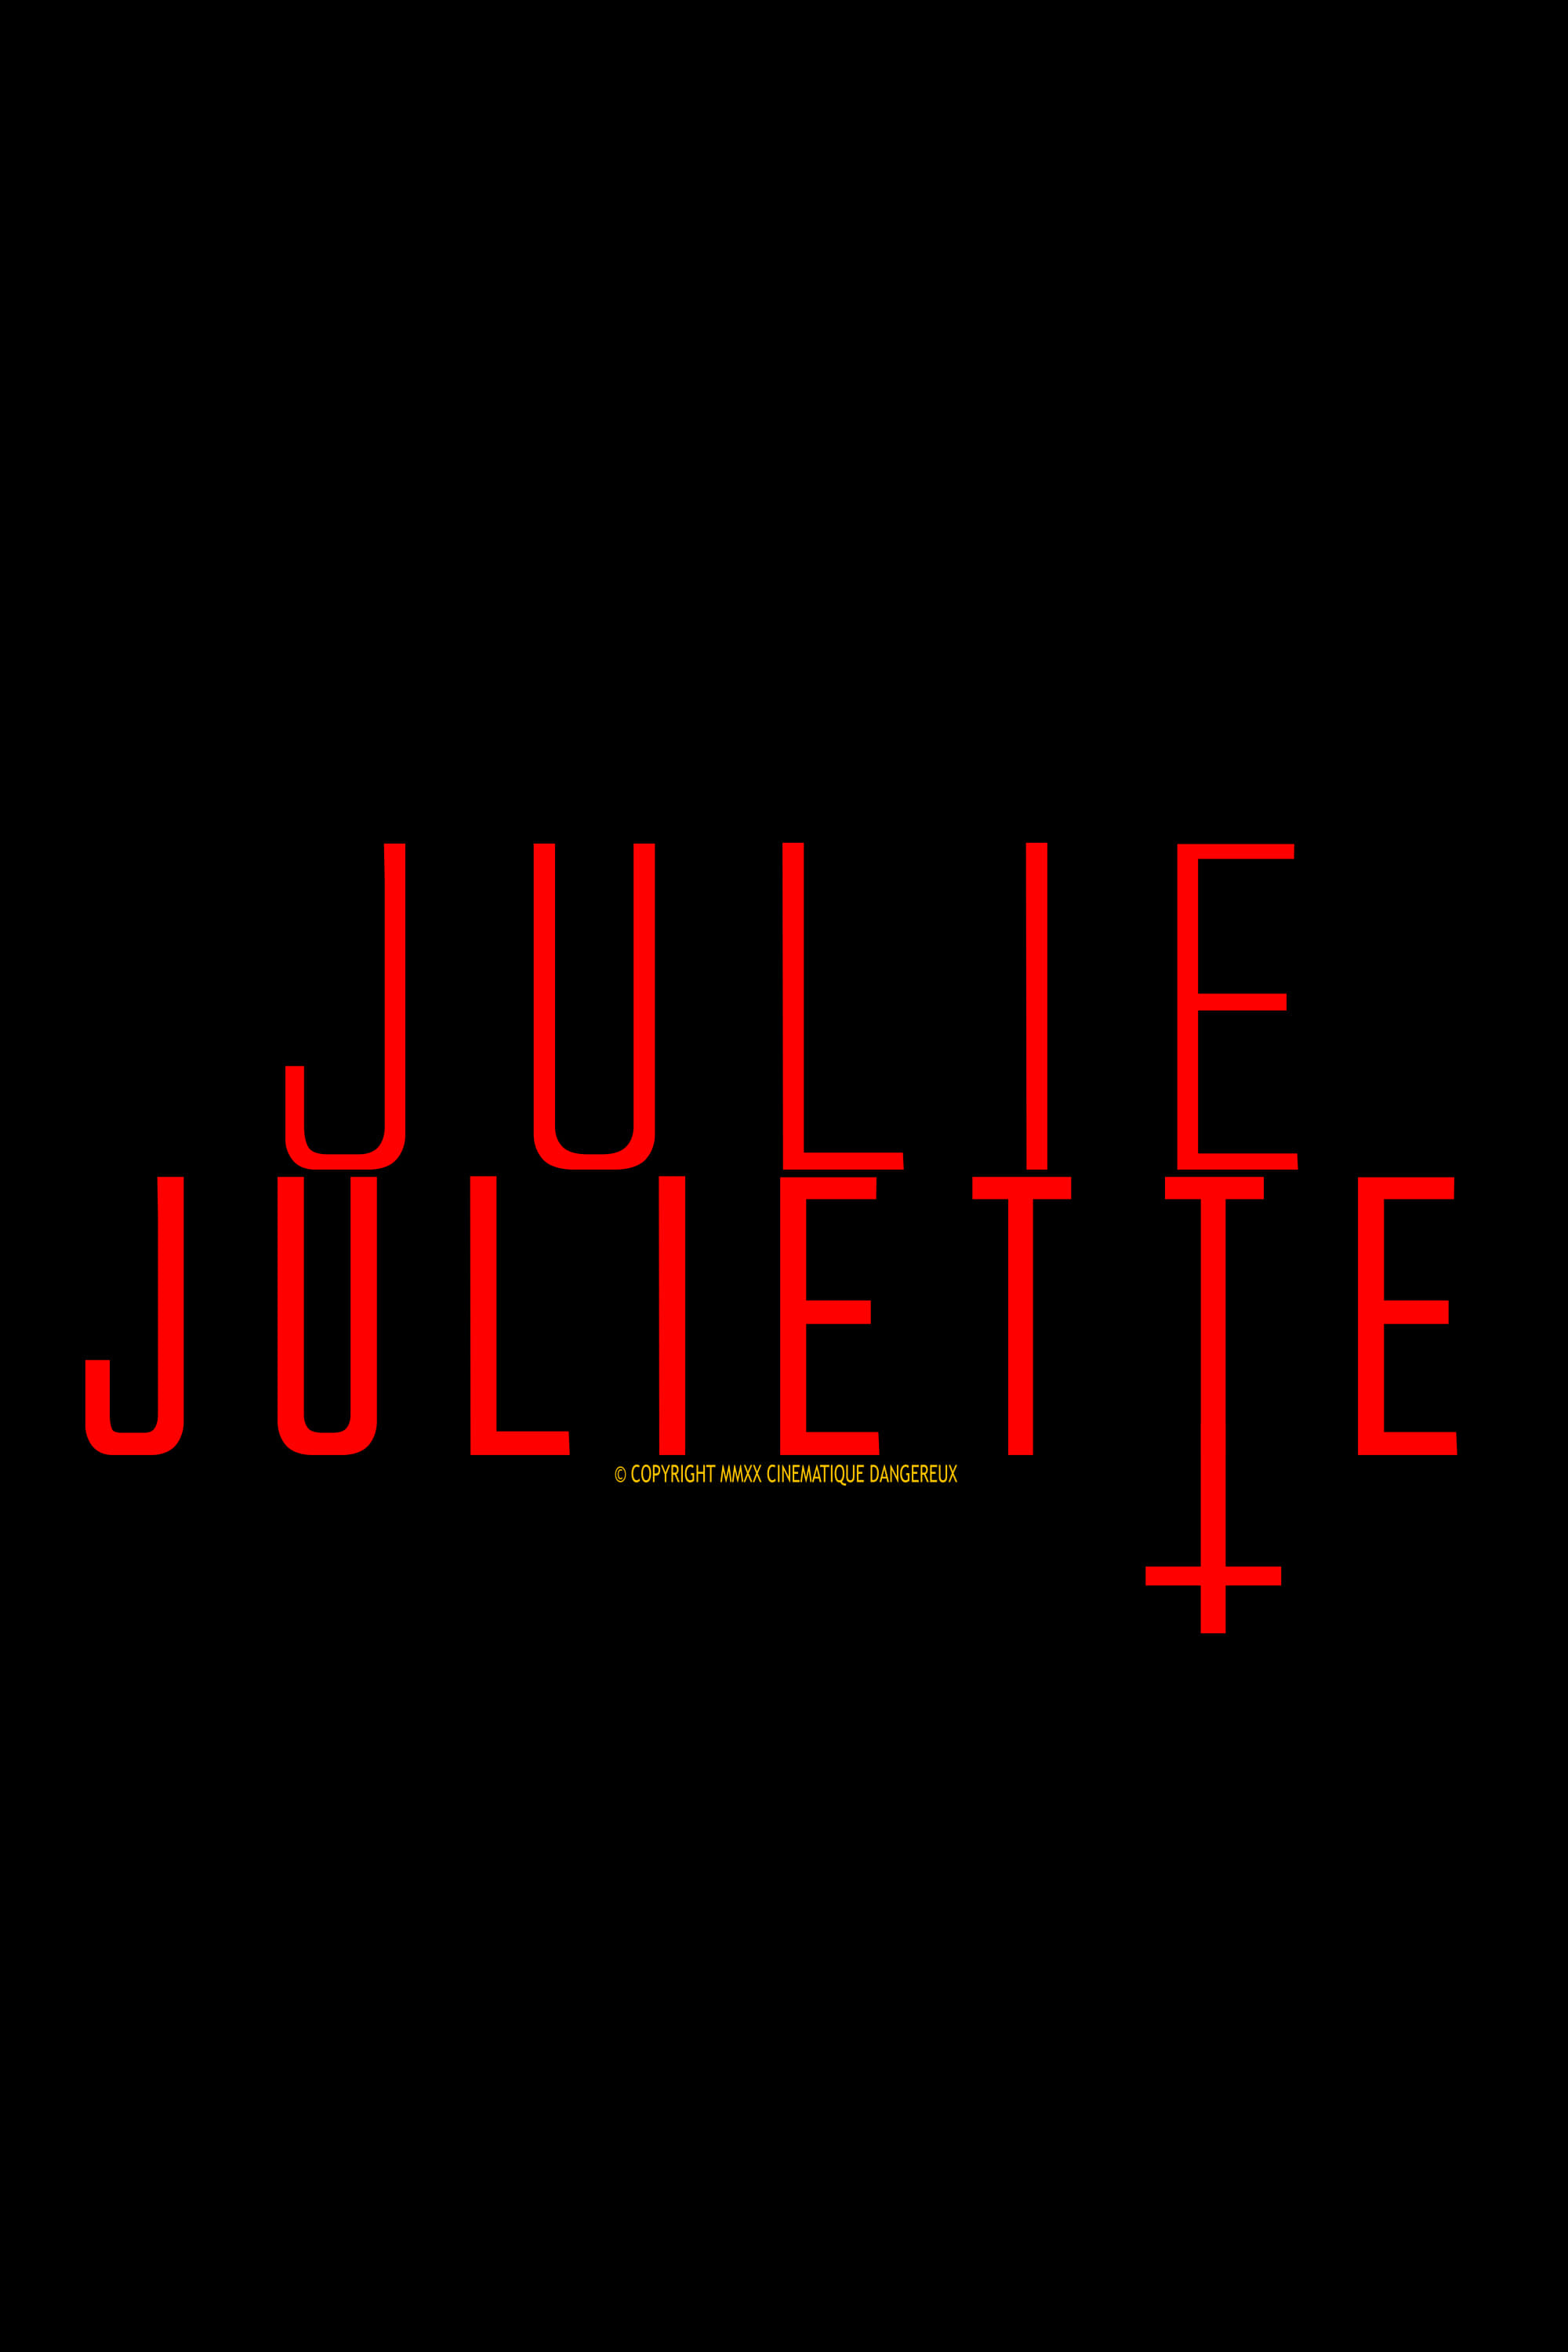 Julie.Juliette